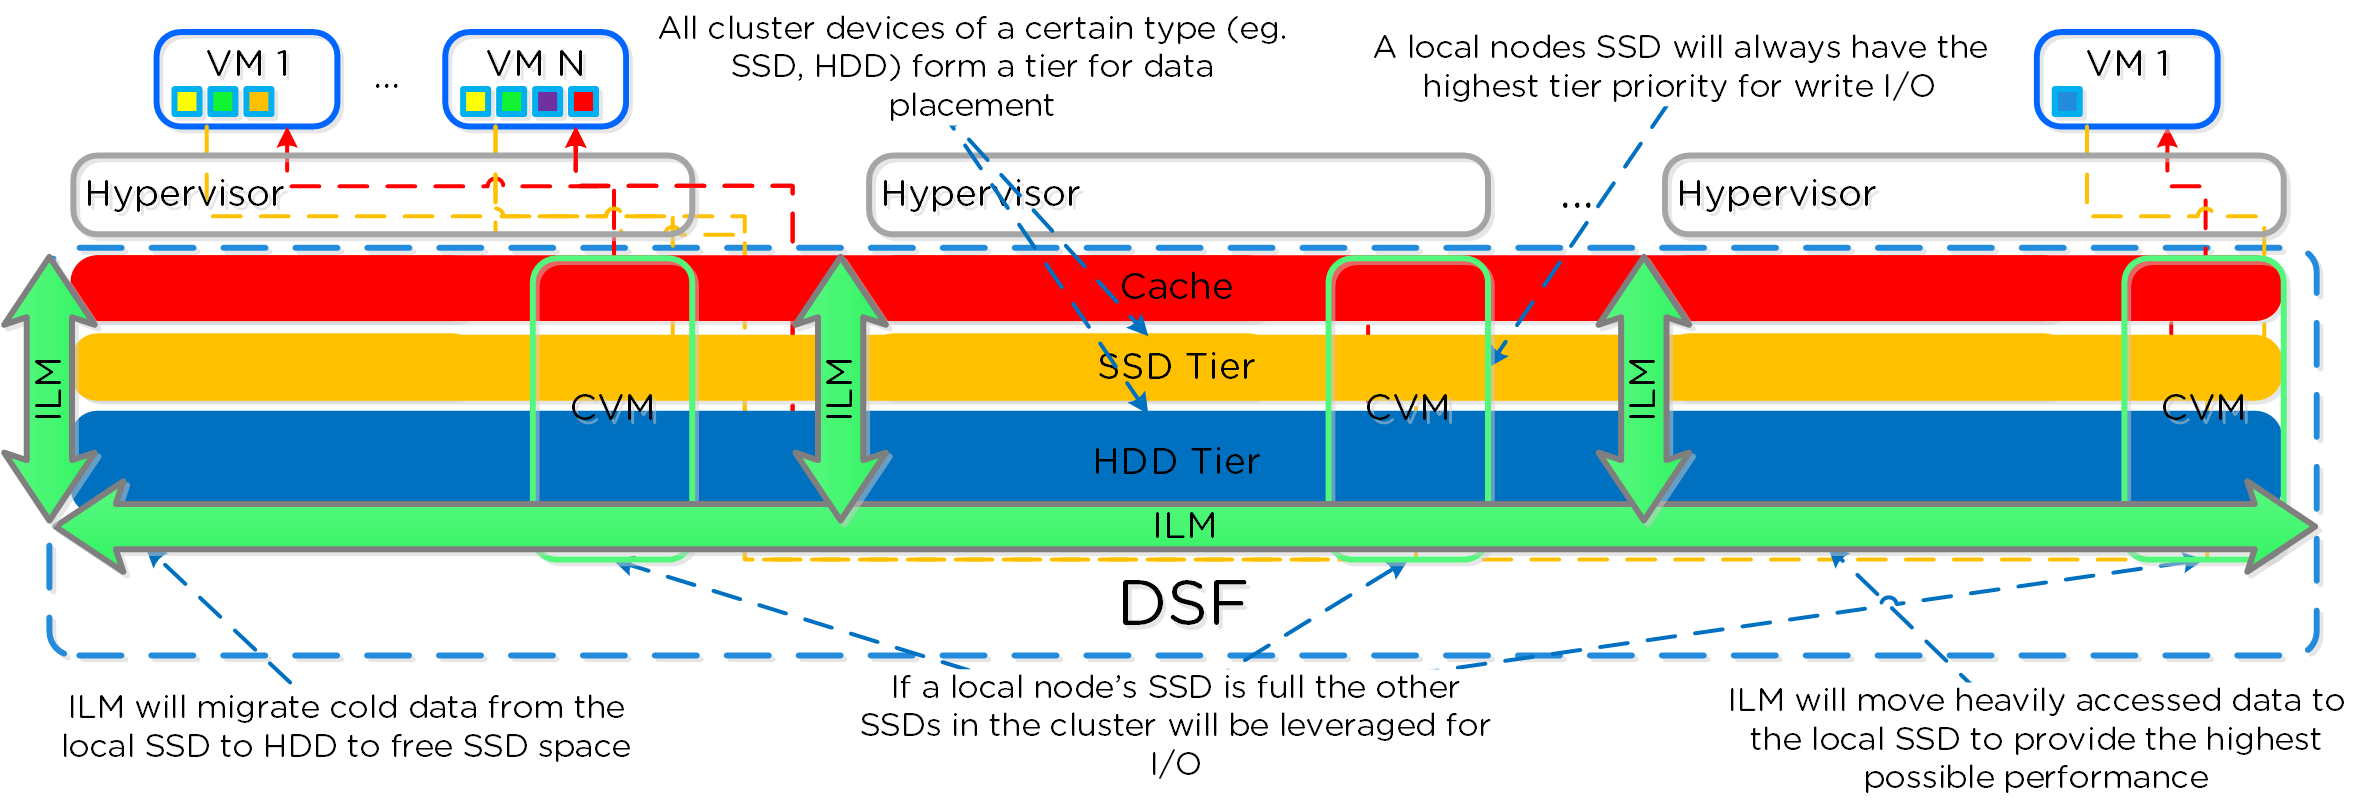 DSF Cluster-wide Tiering